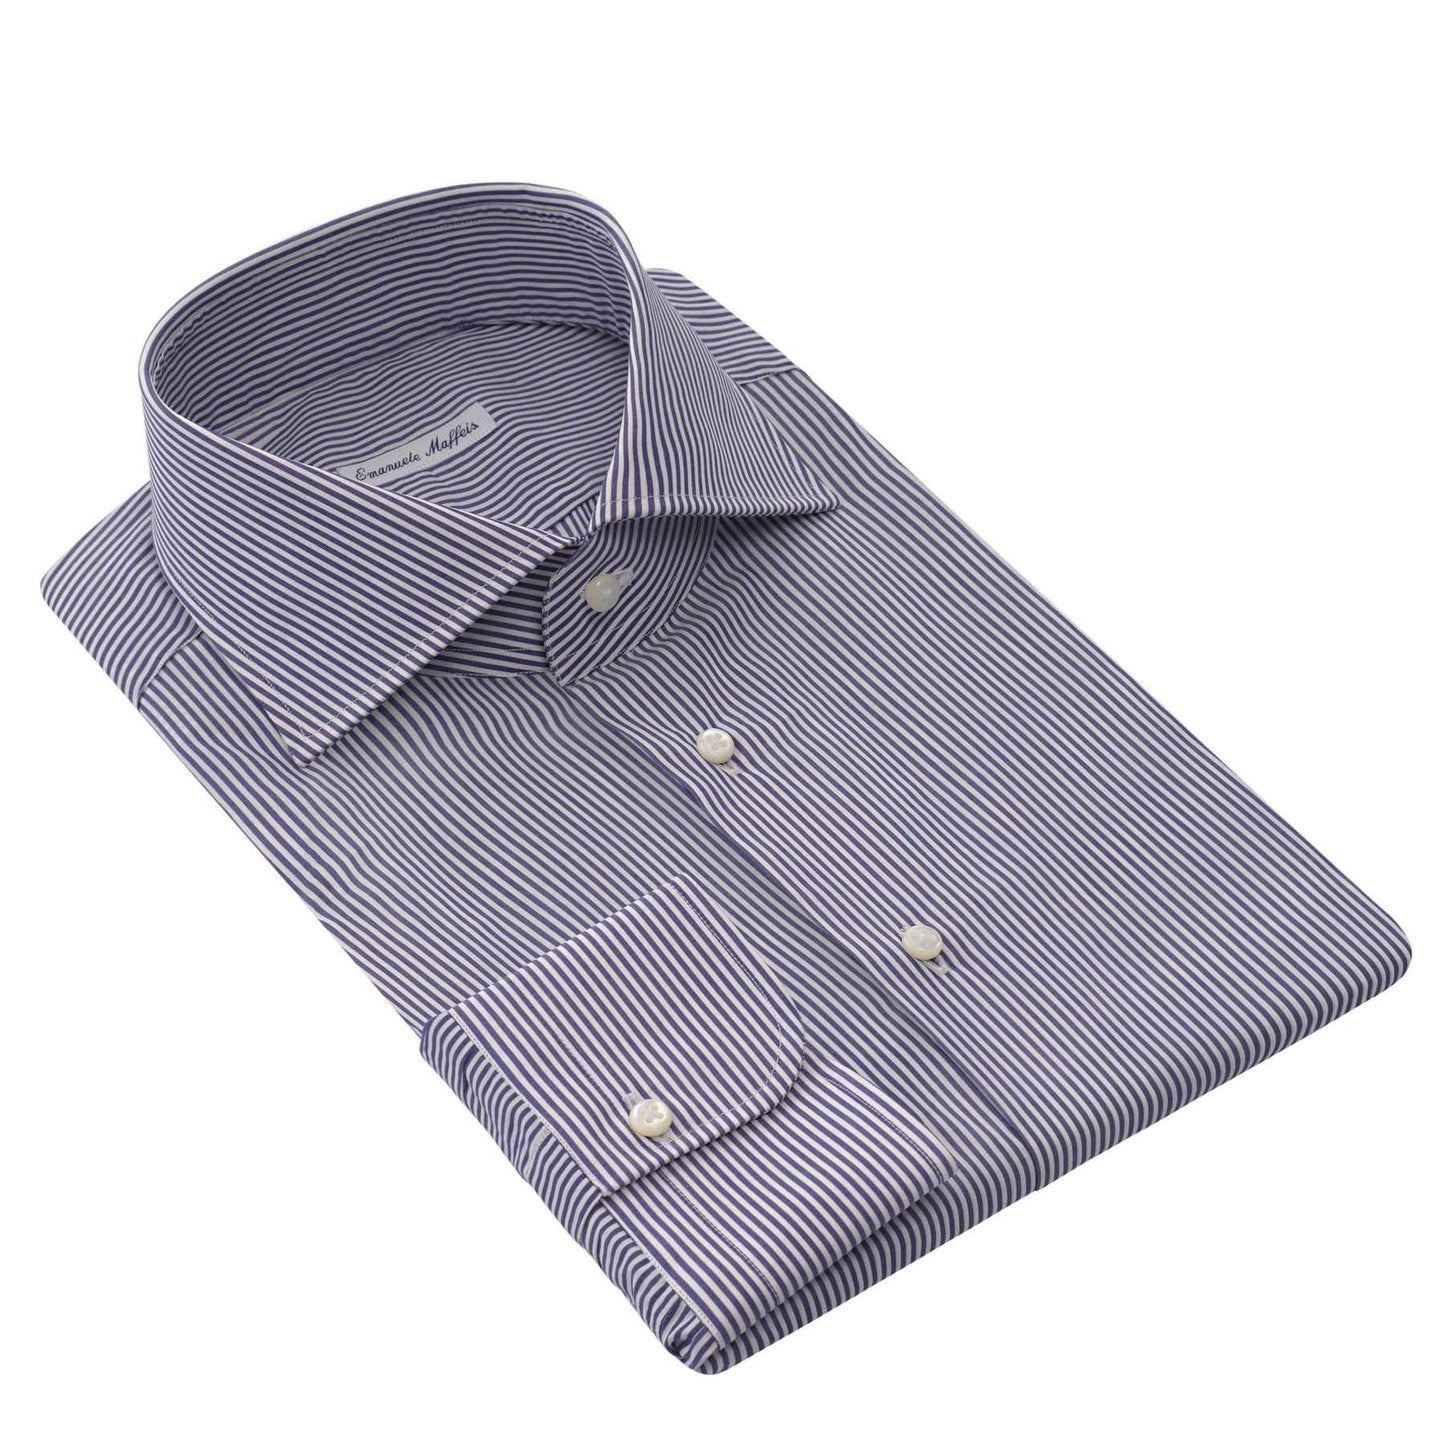 Emanuele Maffeis Bengal - Stripe Cotton Blue Shirt with Cutaway Collar - SARTALE